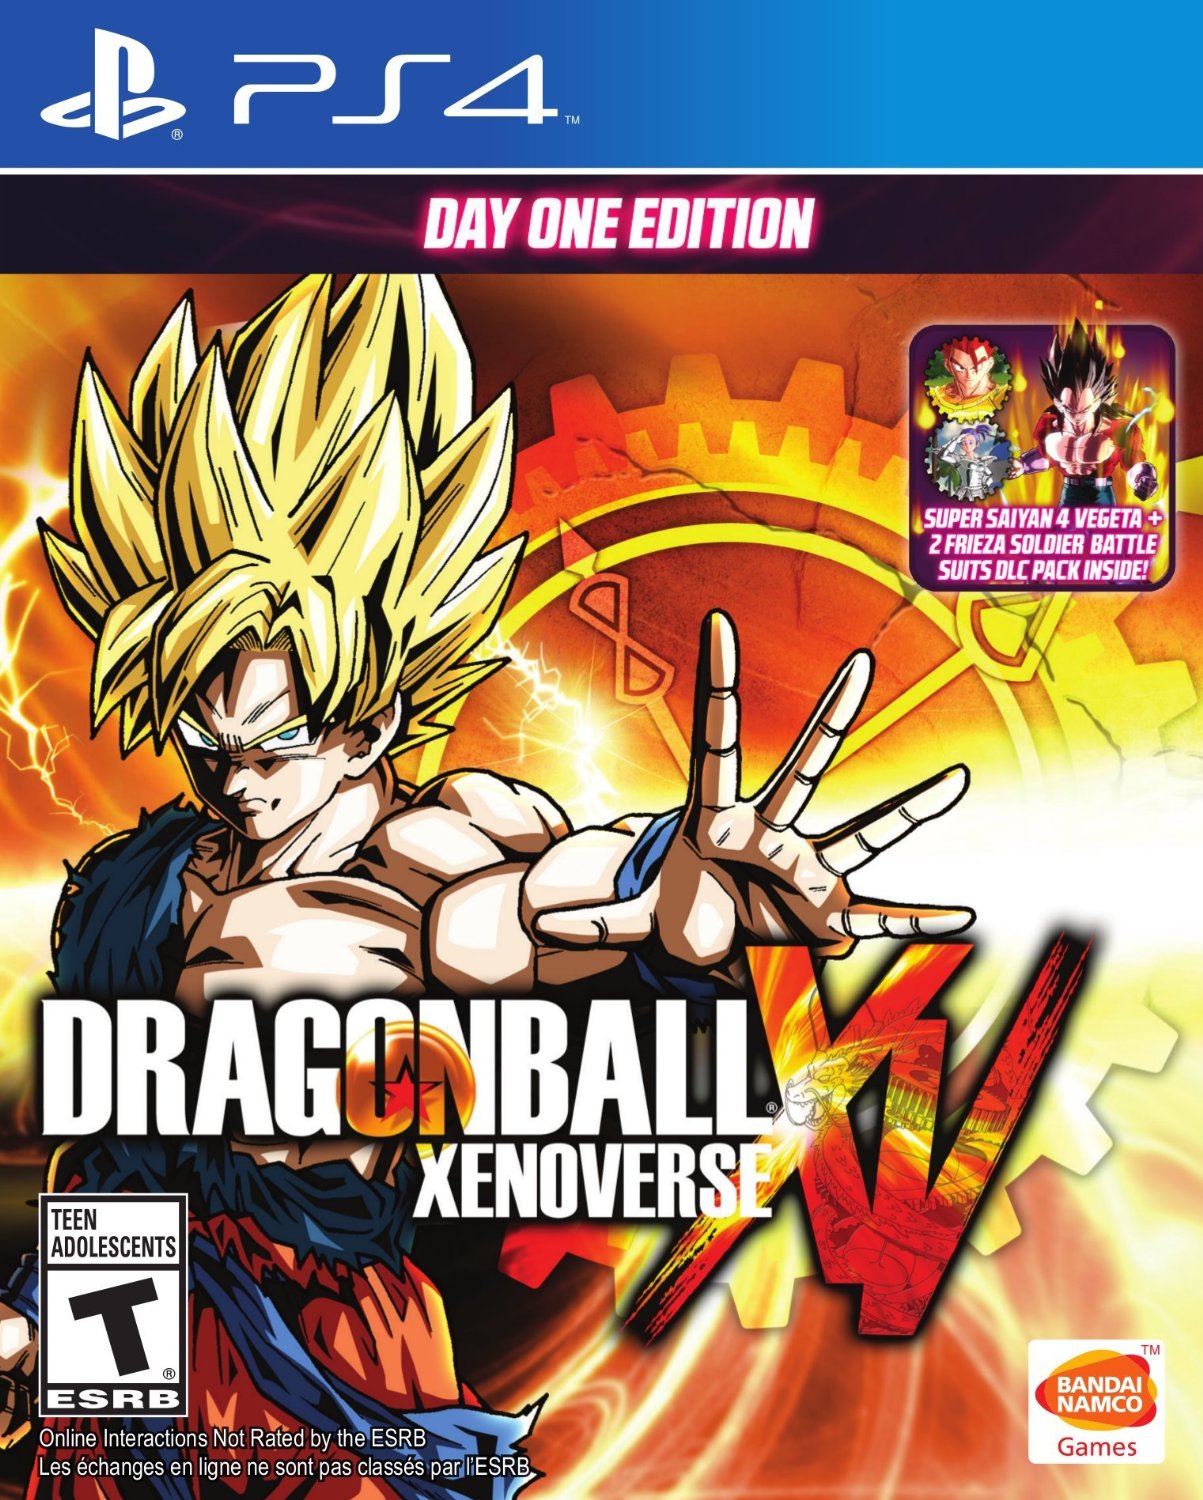 Dragon Ball Xenoverse - Xbox One #1 (Com Detalhe) - Arena Games - Loja Geek